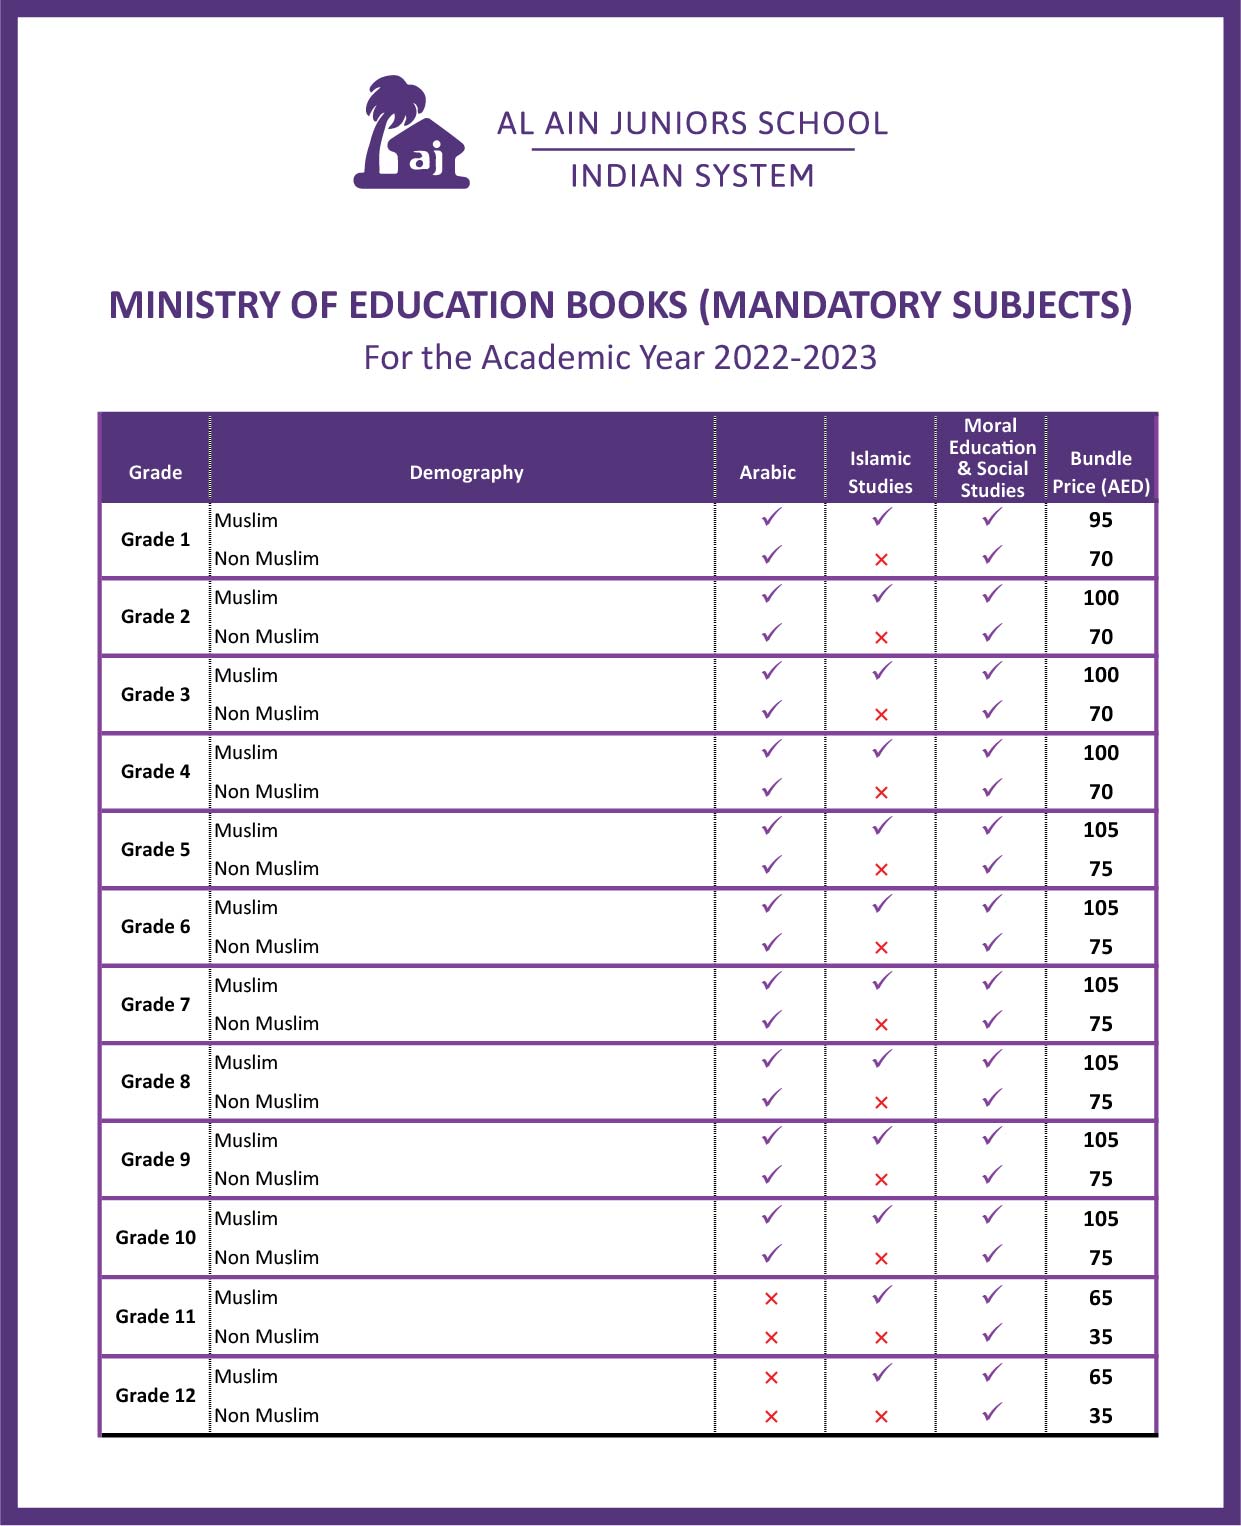 AJI Ministry of Education Books Mandatory Subjects 2022 2023 01